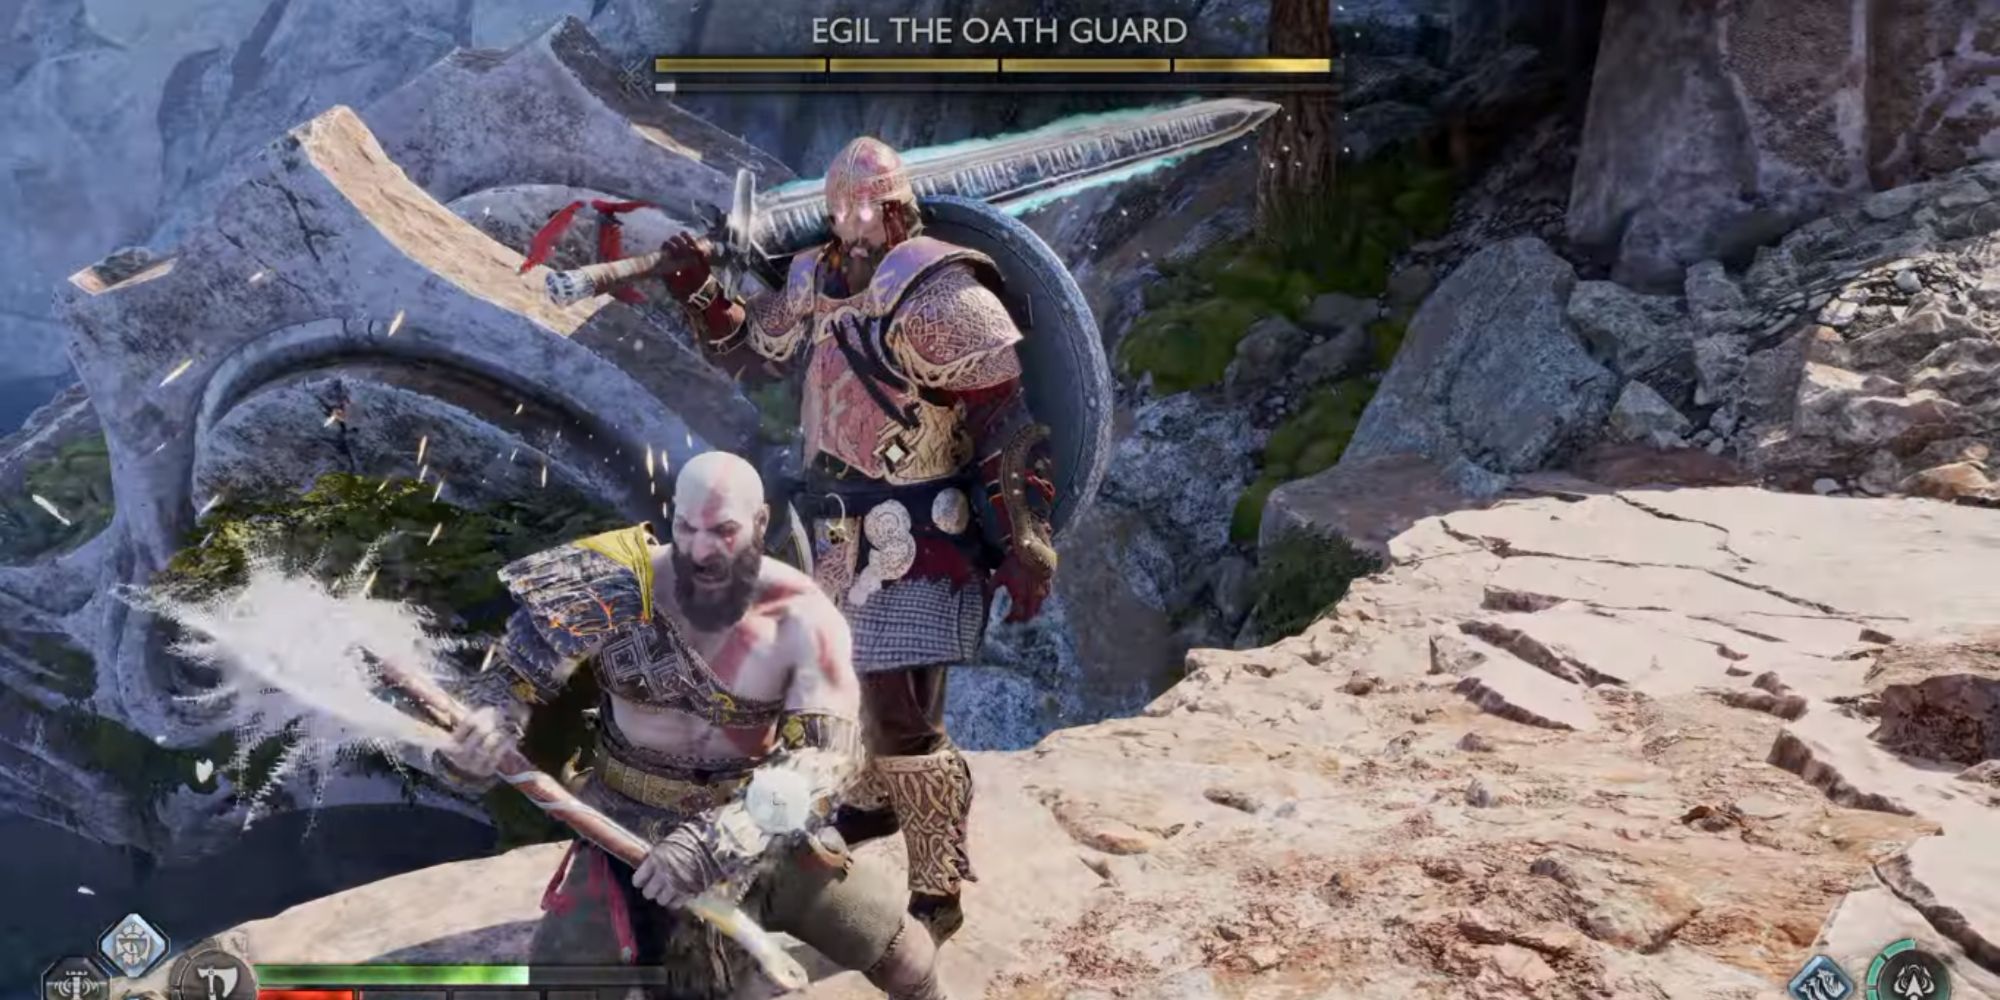 Kratos fighting Egil the Oath Guard.